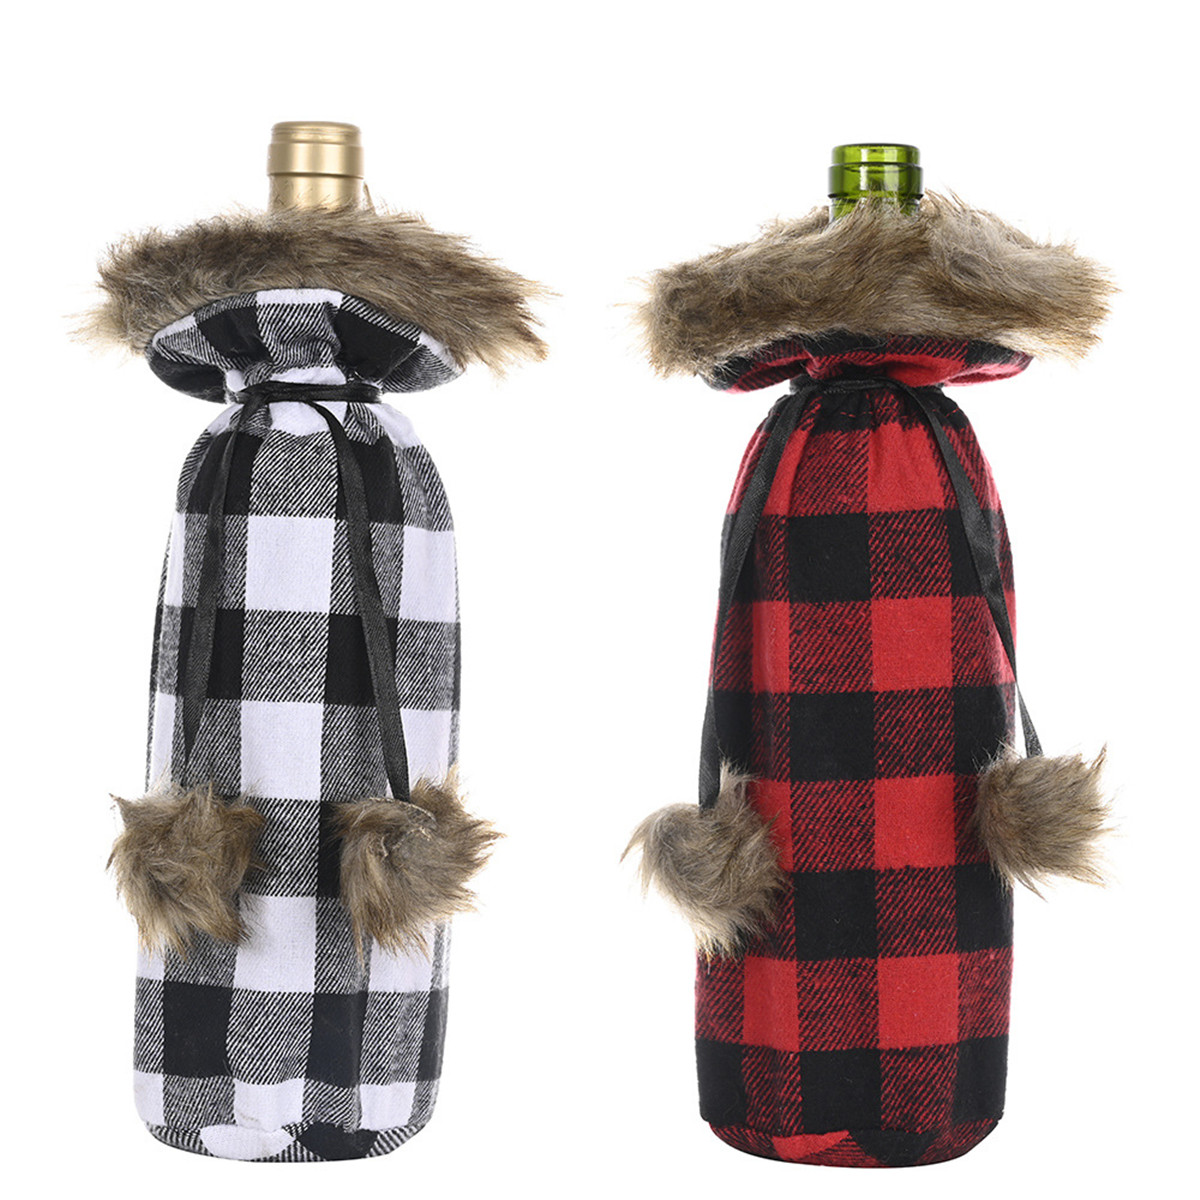 Christmas-Sweater-Winee-Bottle-Clothes-Collar--Button-Coat-Design-Decorative-Bottle-Sleeve-Winee-Bot-1720509-10